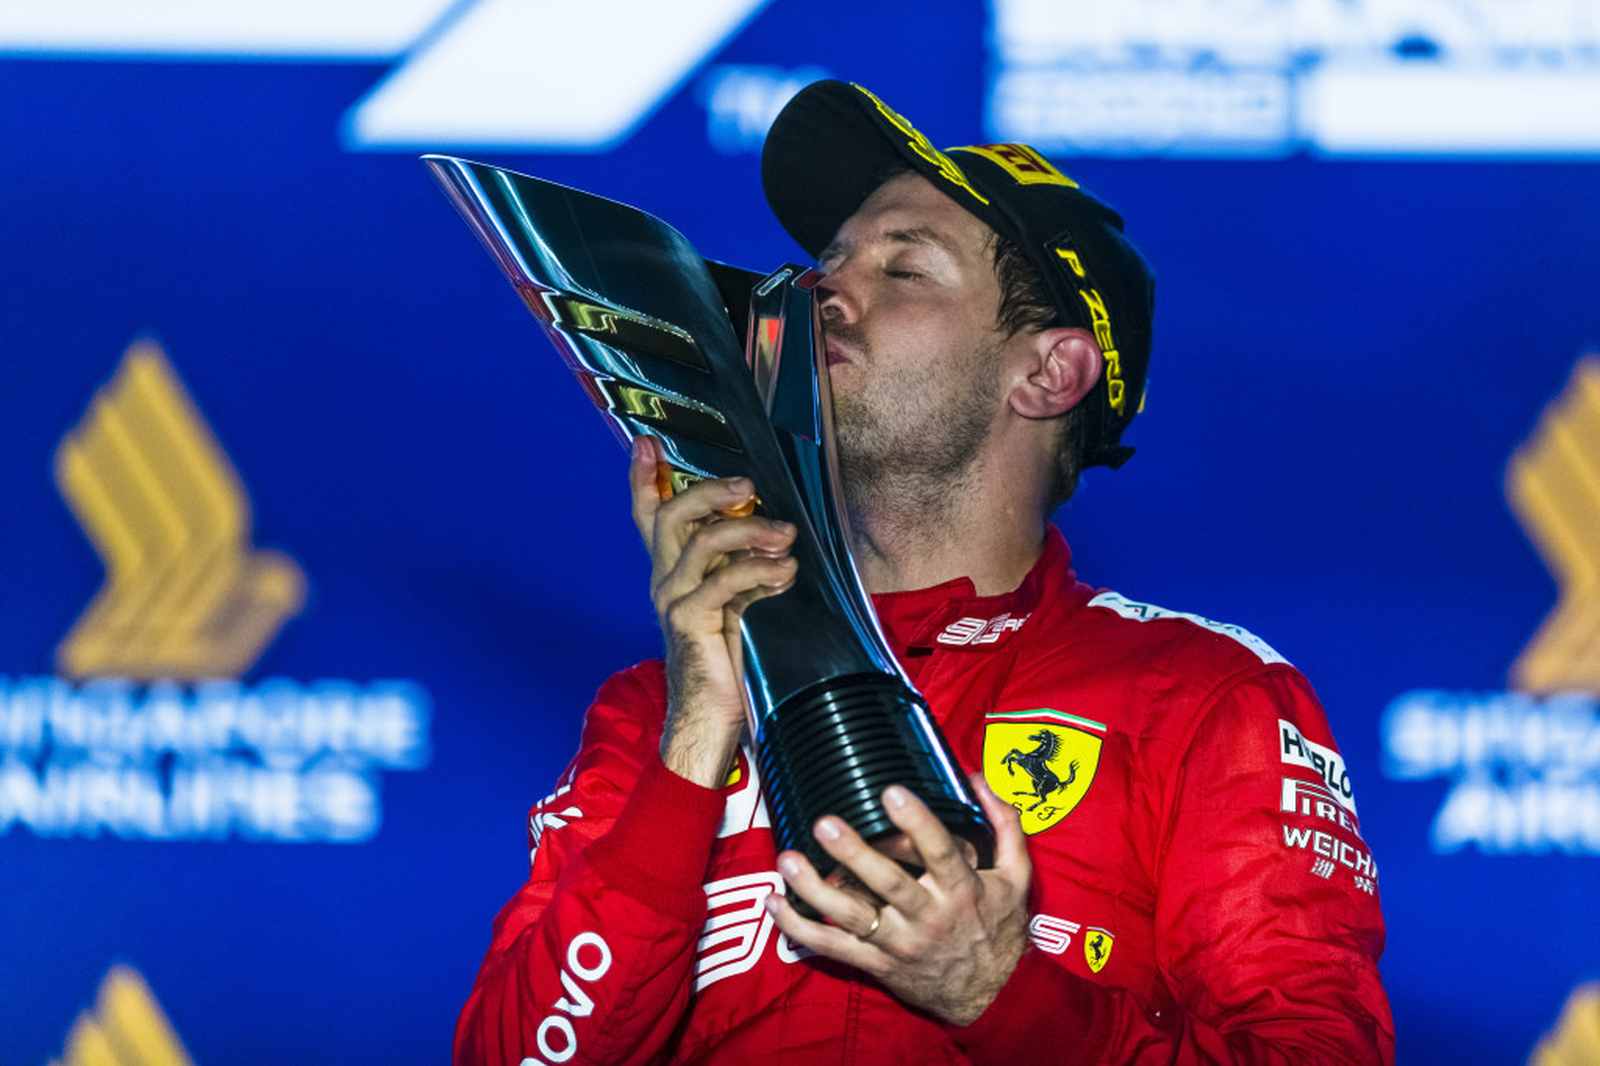 3º lugar: Sebastian Vettel (ALE) - 53 vitórias.